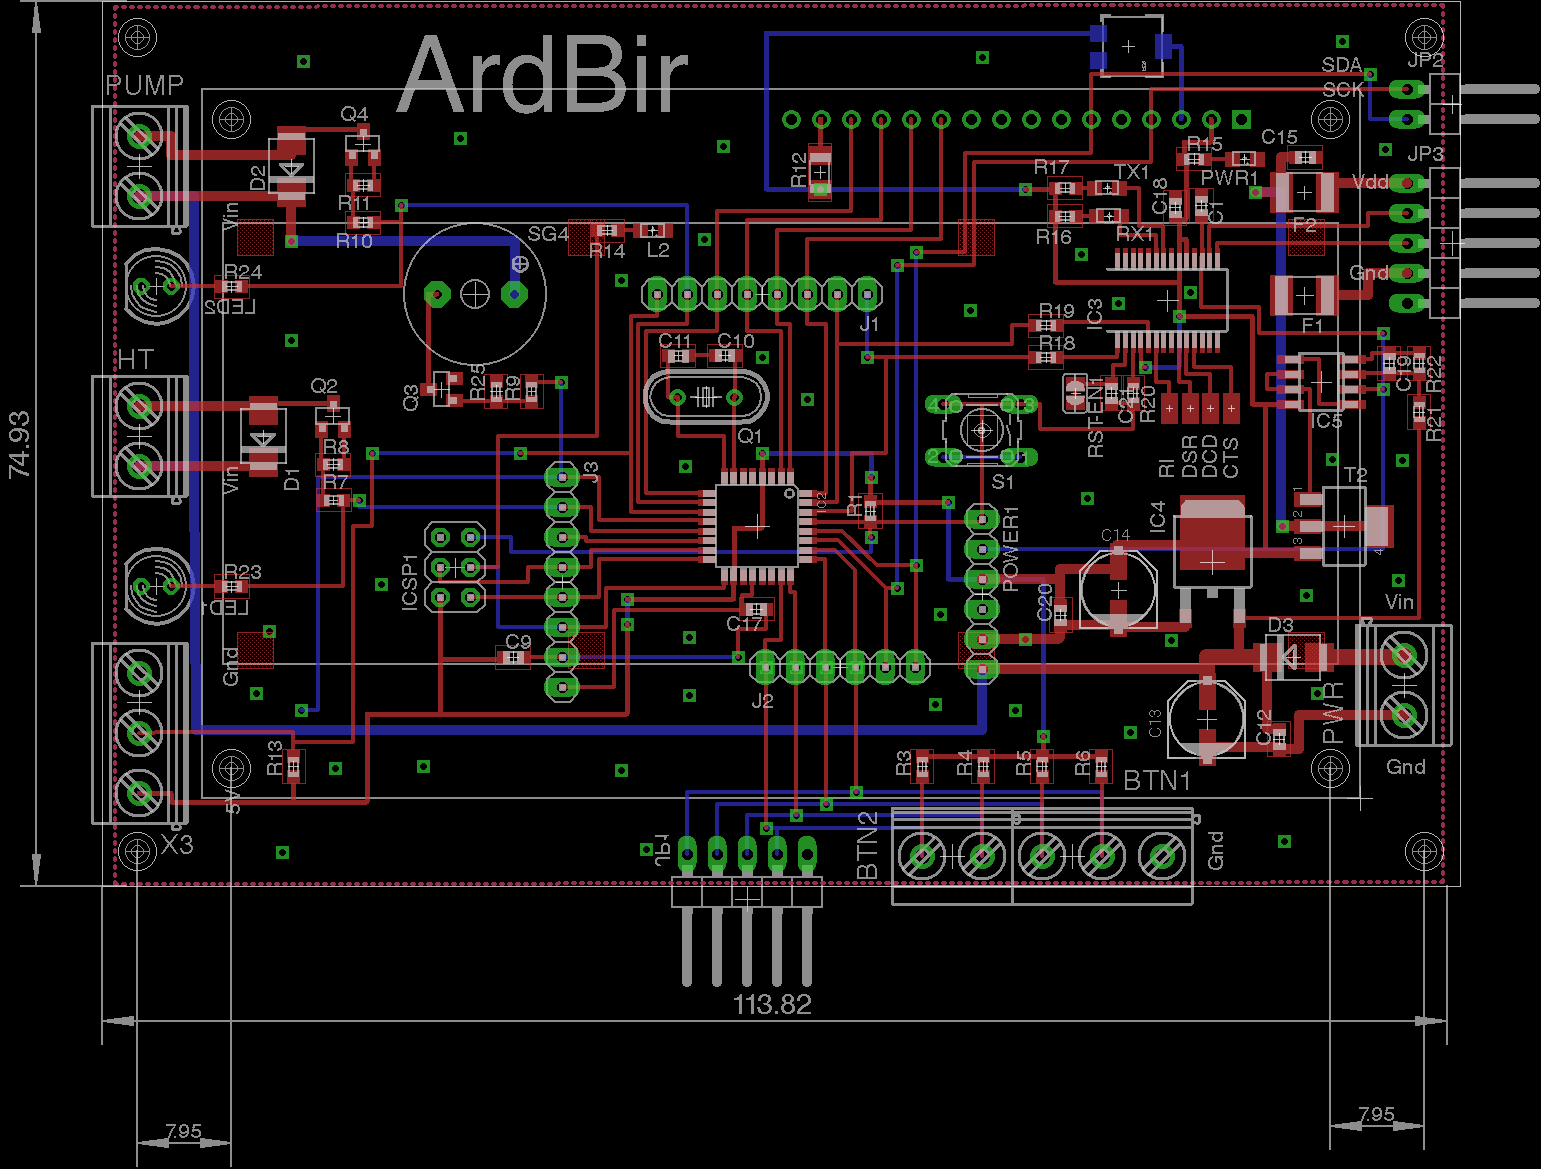 ArdBir_PCB.png